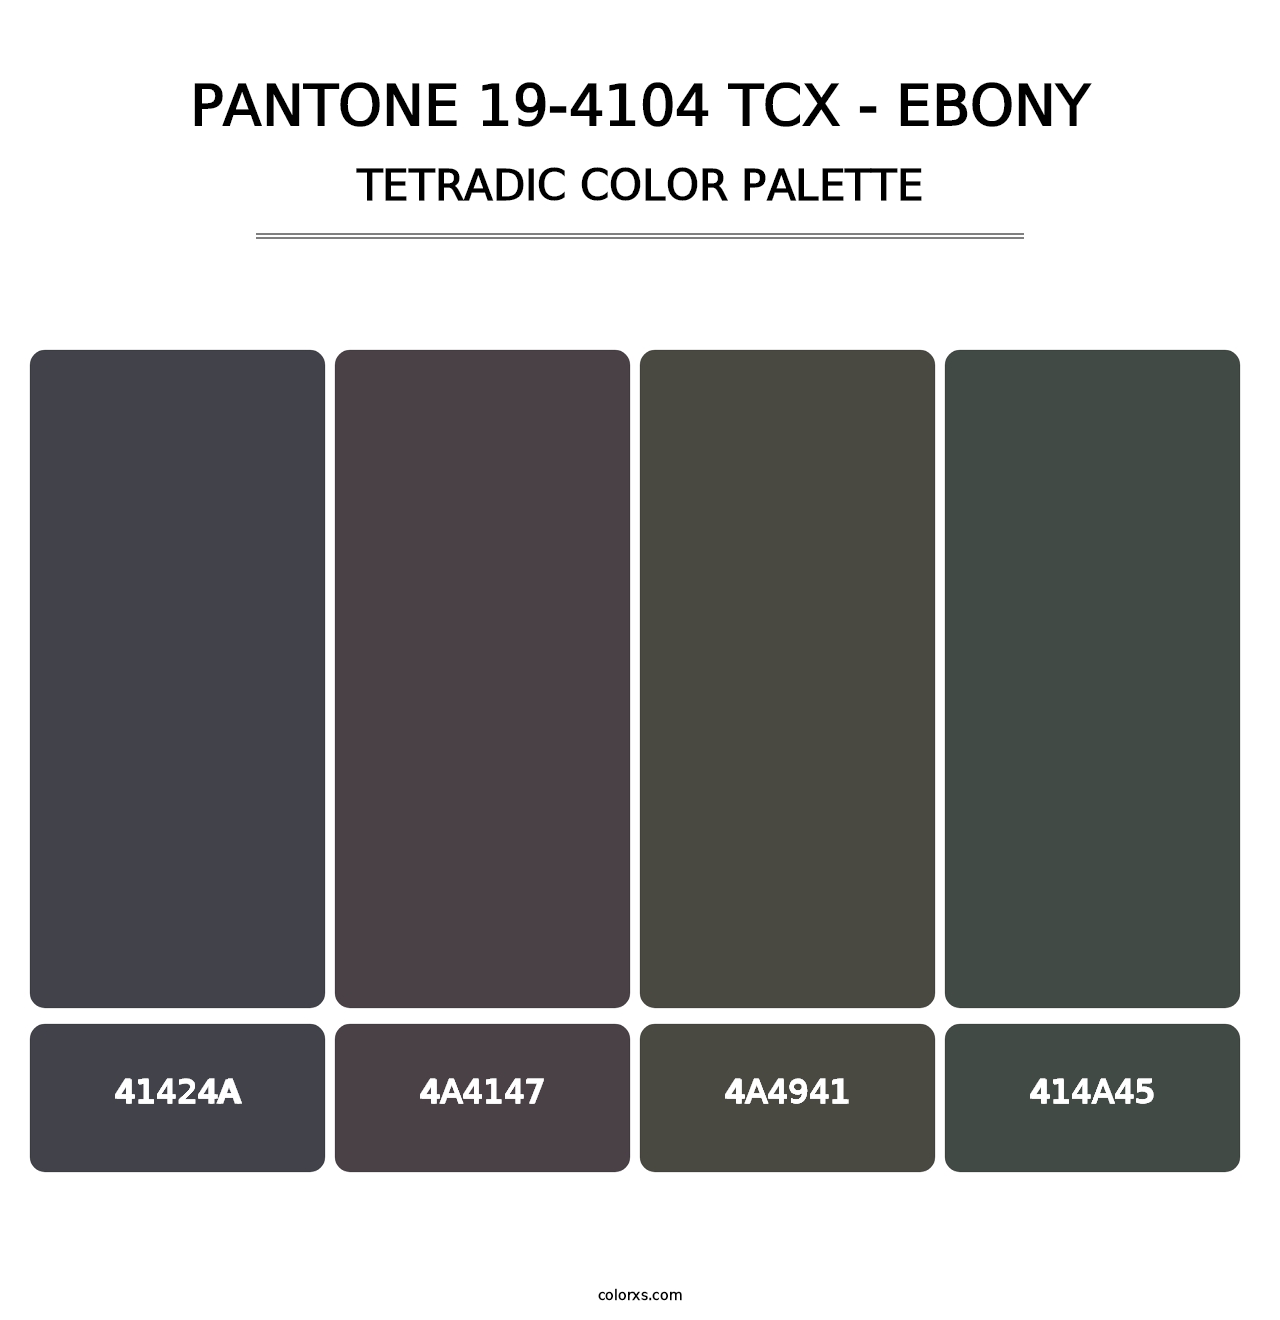 PANTONE 19-4104 TCX - Ebony - Tetradic Color Palette